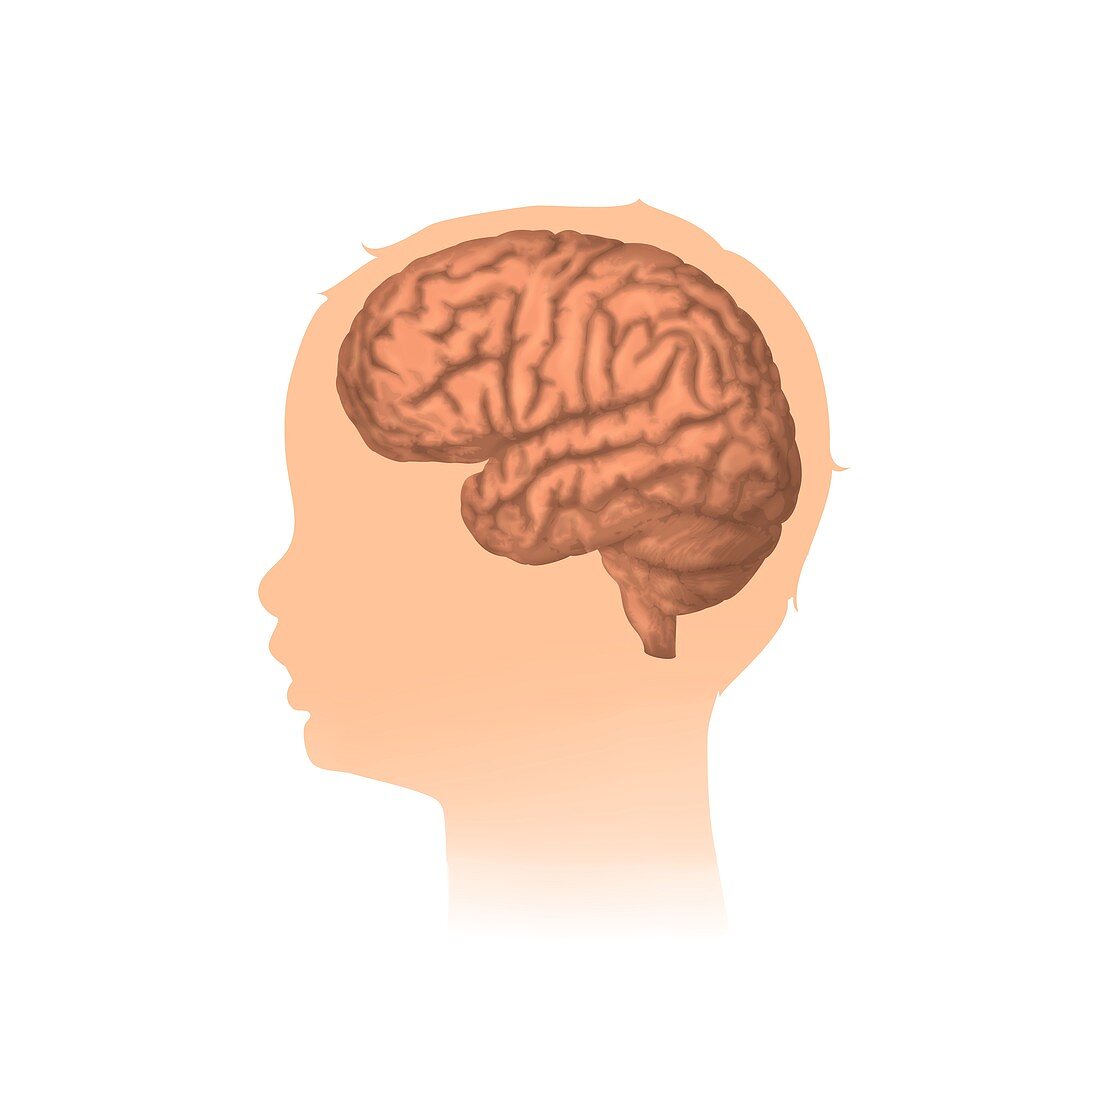 Child's head with brain, illustration